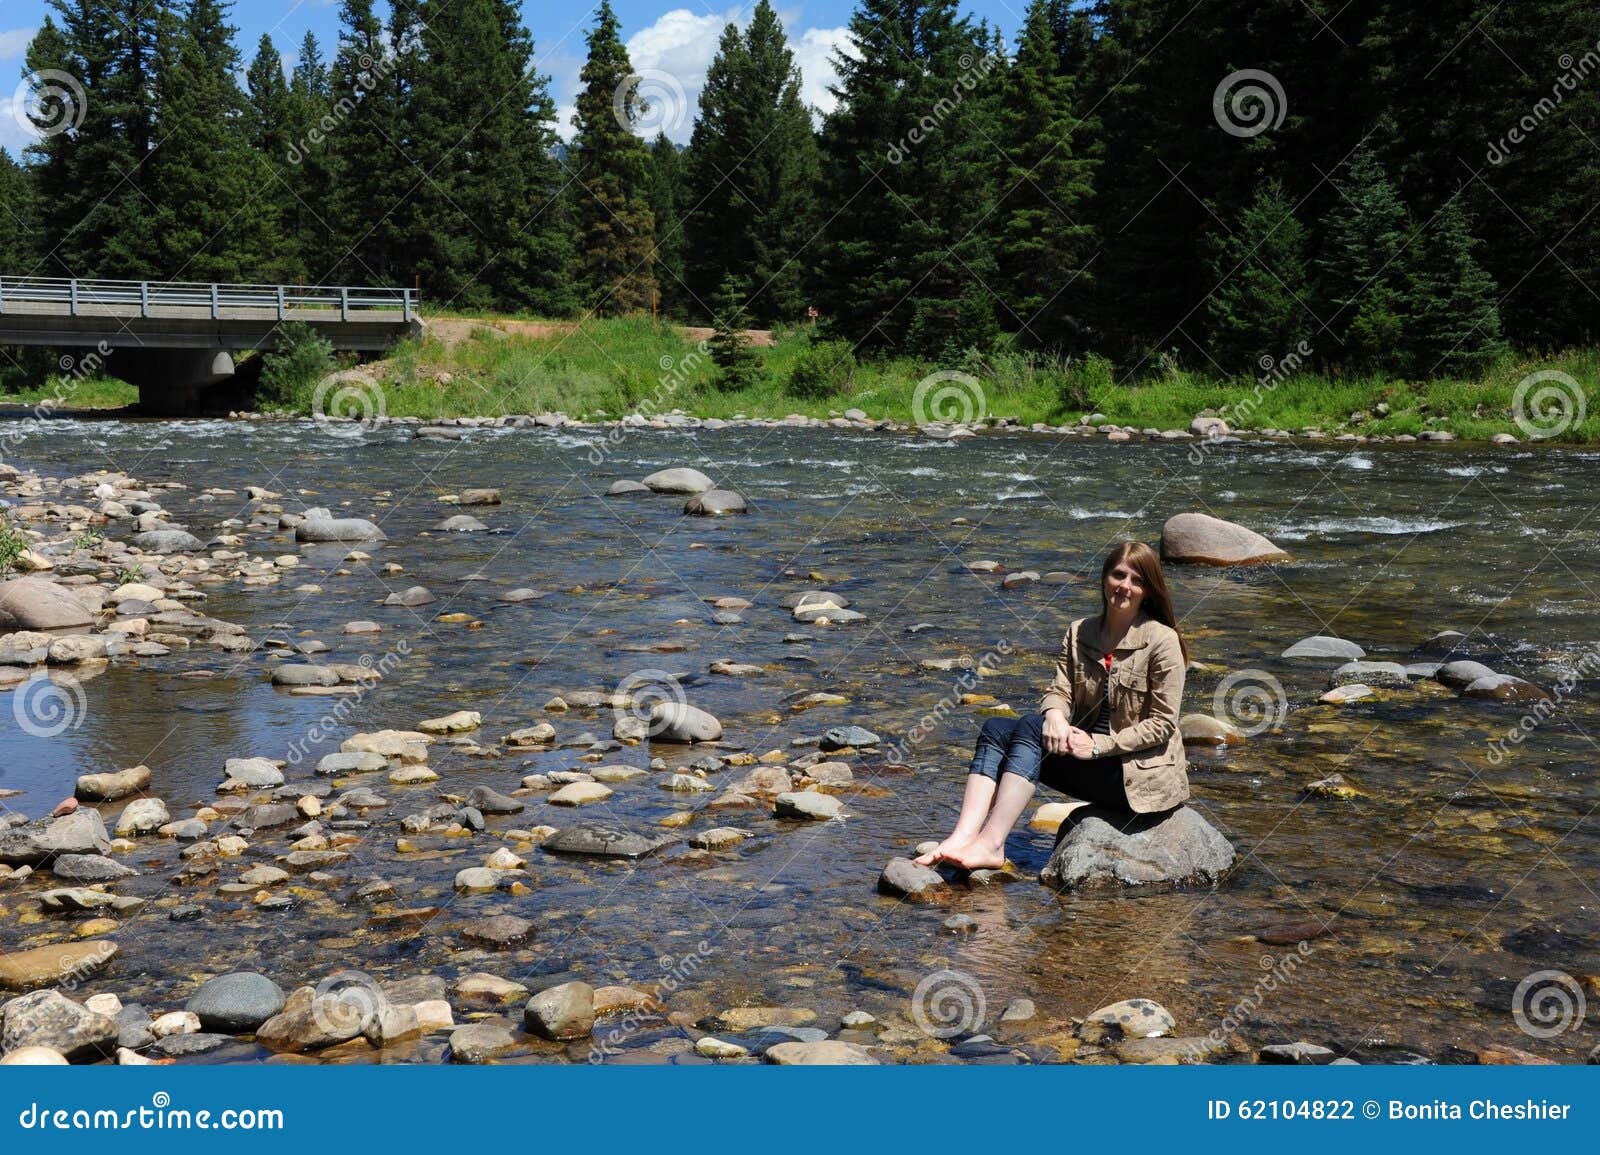 barefoot in gallatin river